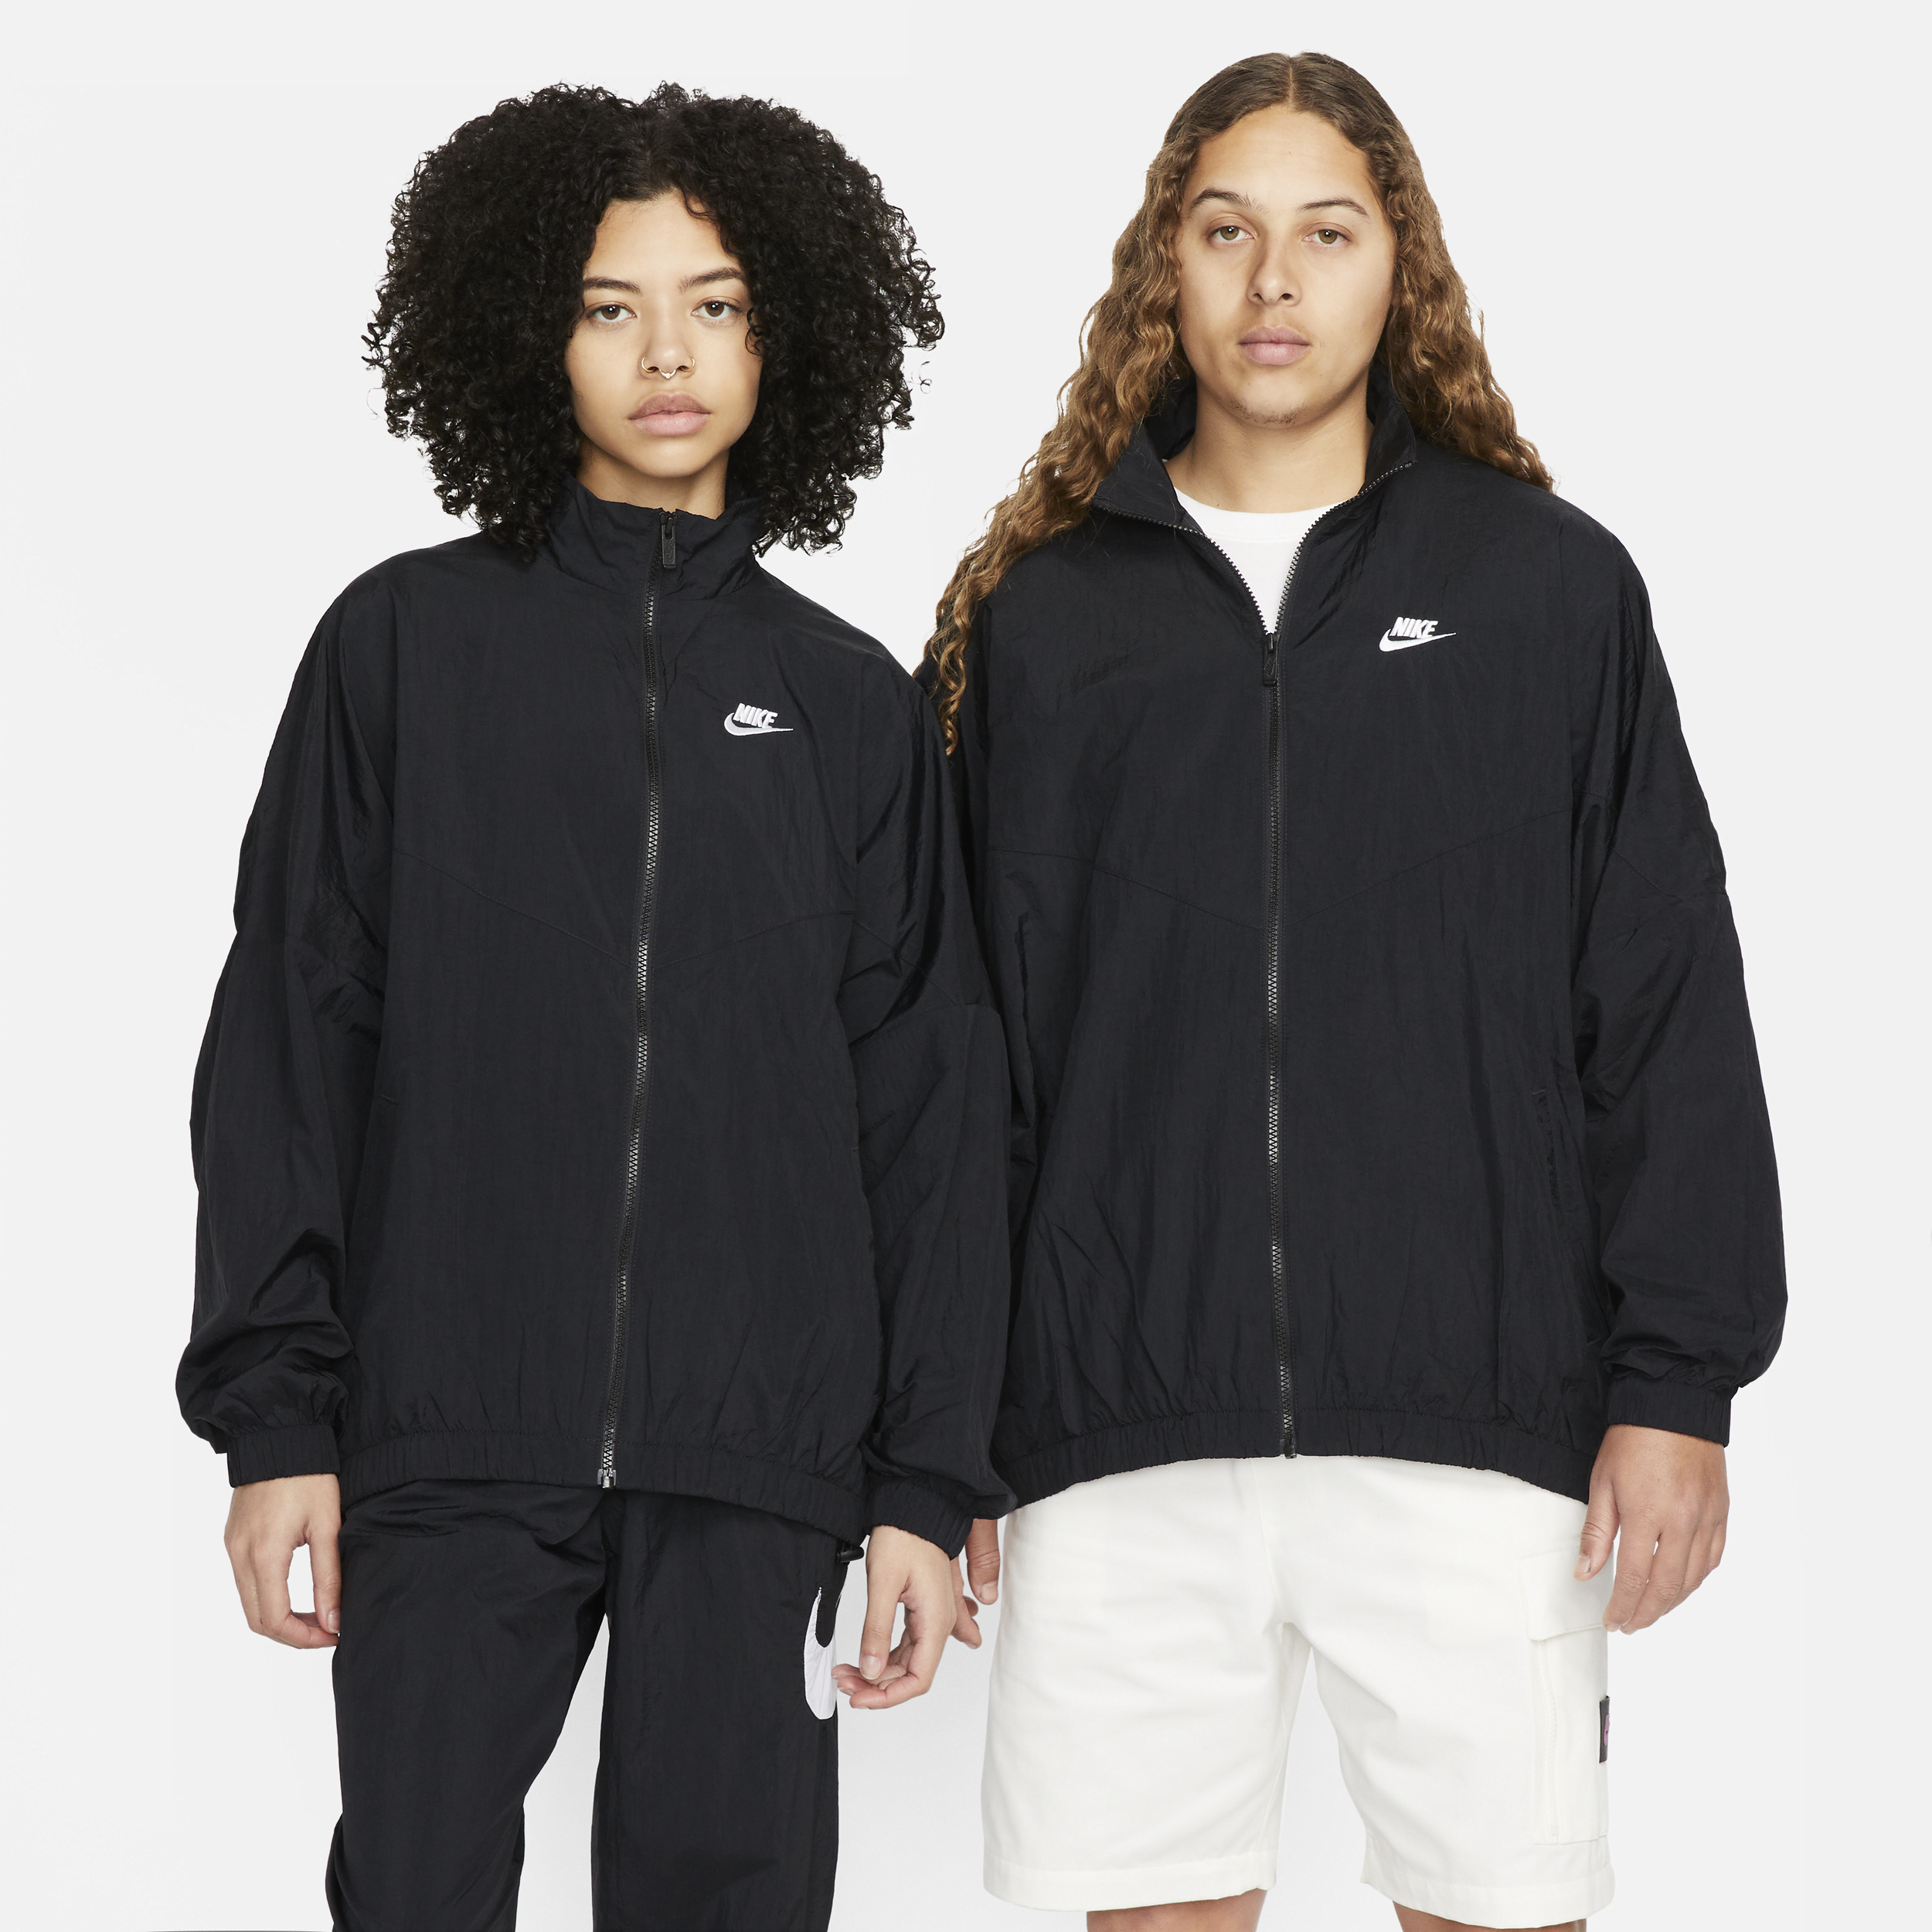 Vævet Nike Sportswear Essential Windrunner-jakke til kvinder - sort